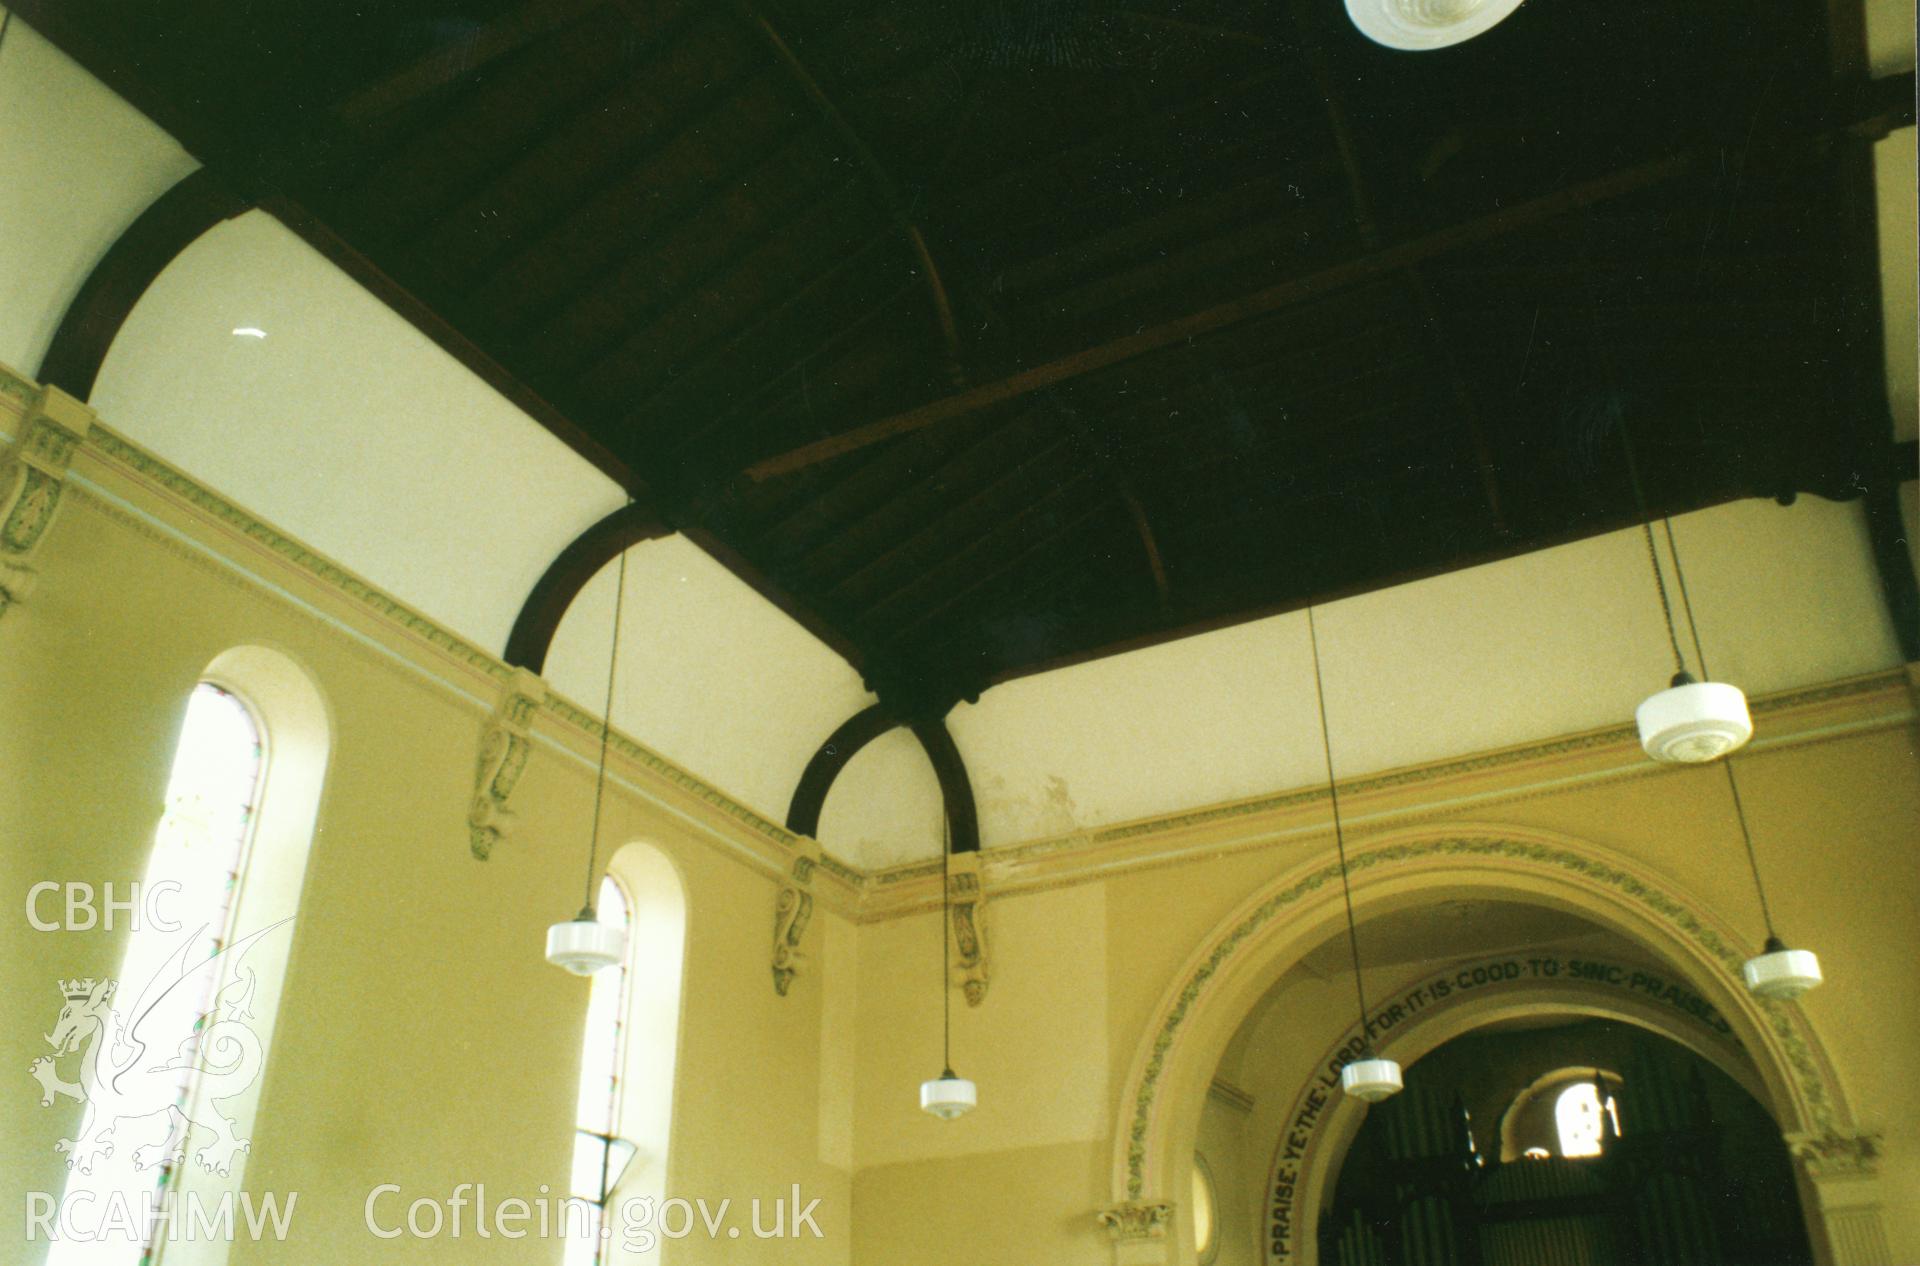 Digital copy of a colour photograph showing an interior view of English Baptist Church, Lammas Street, Carmarthen, taken by Robert Scourfield, 1996.